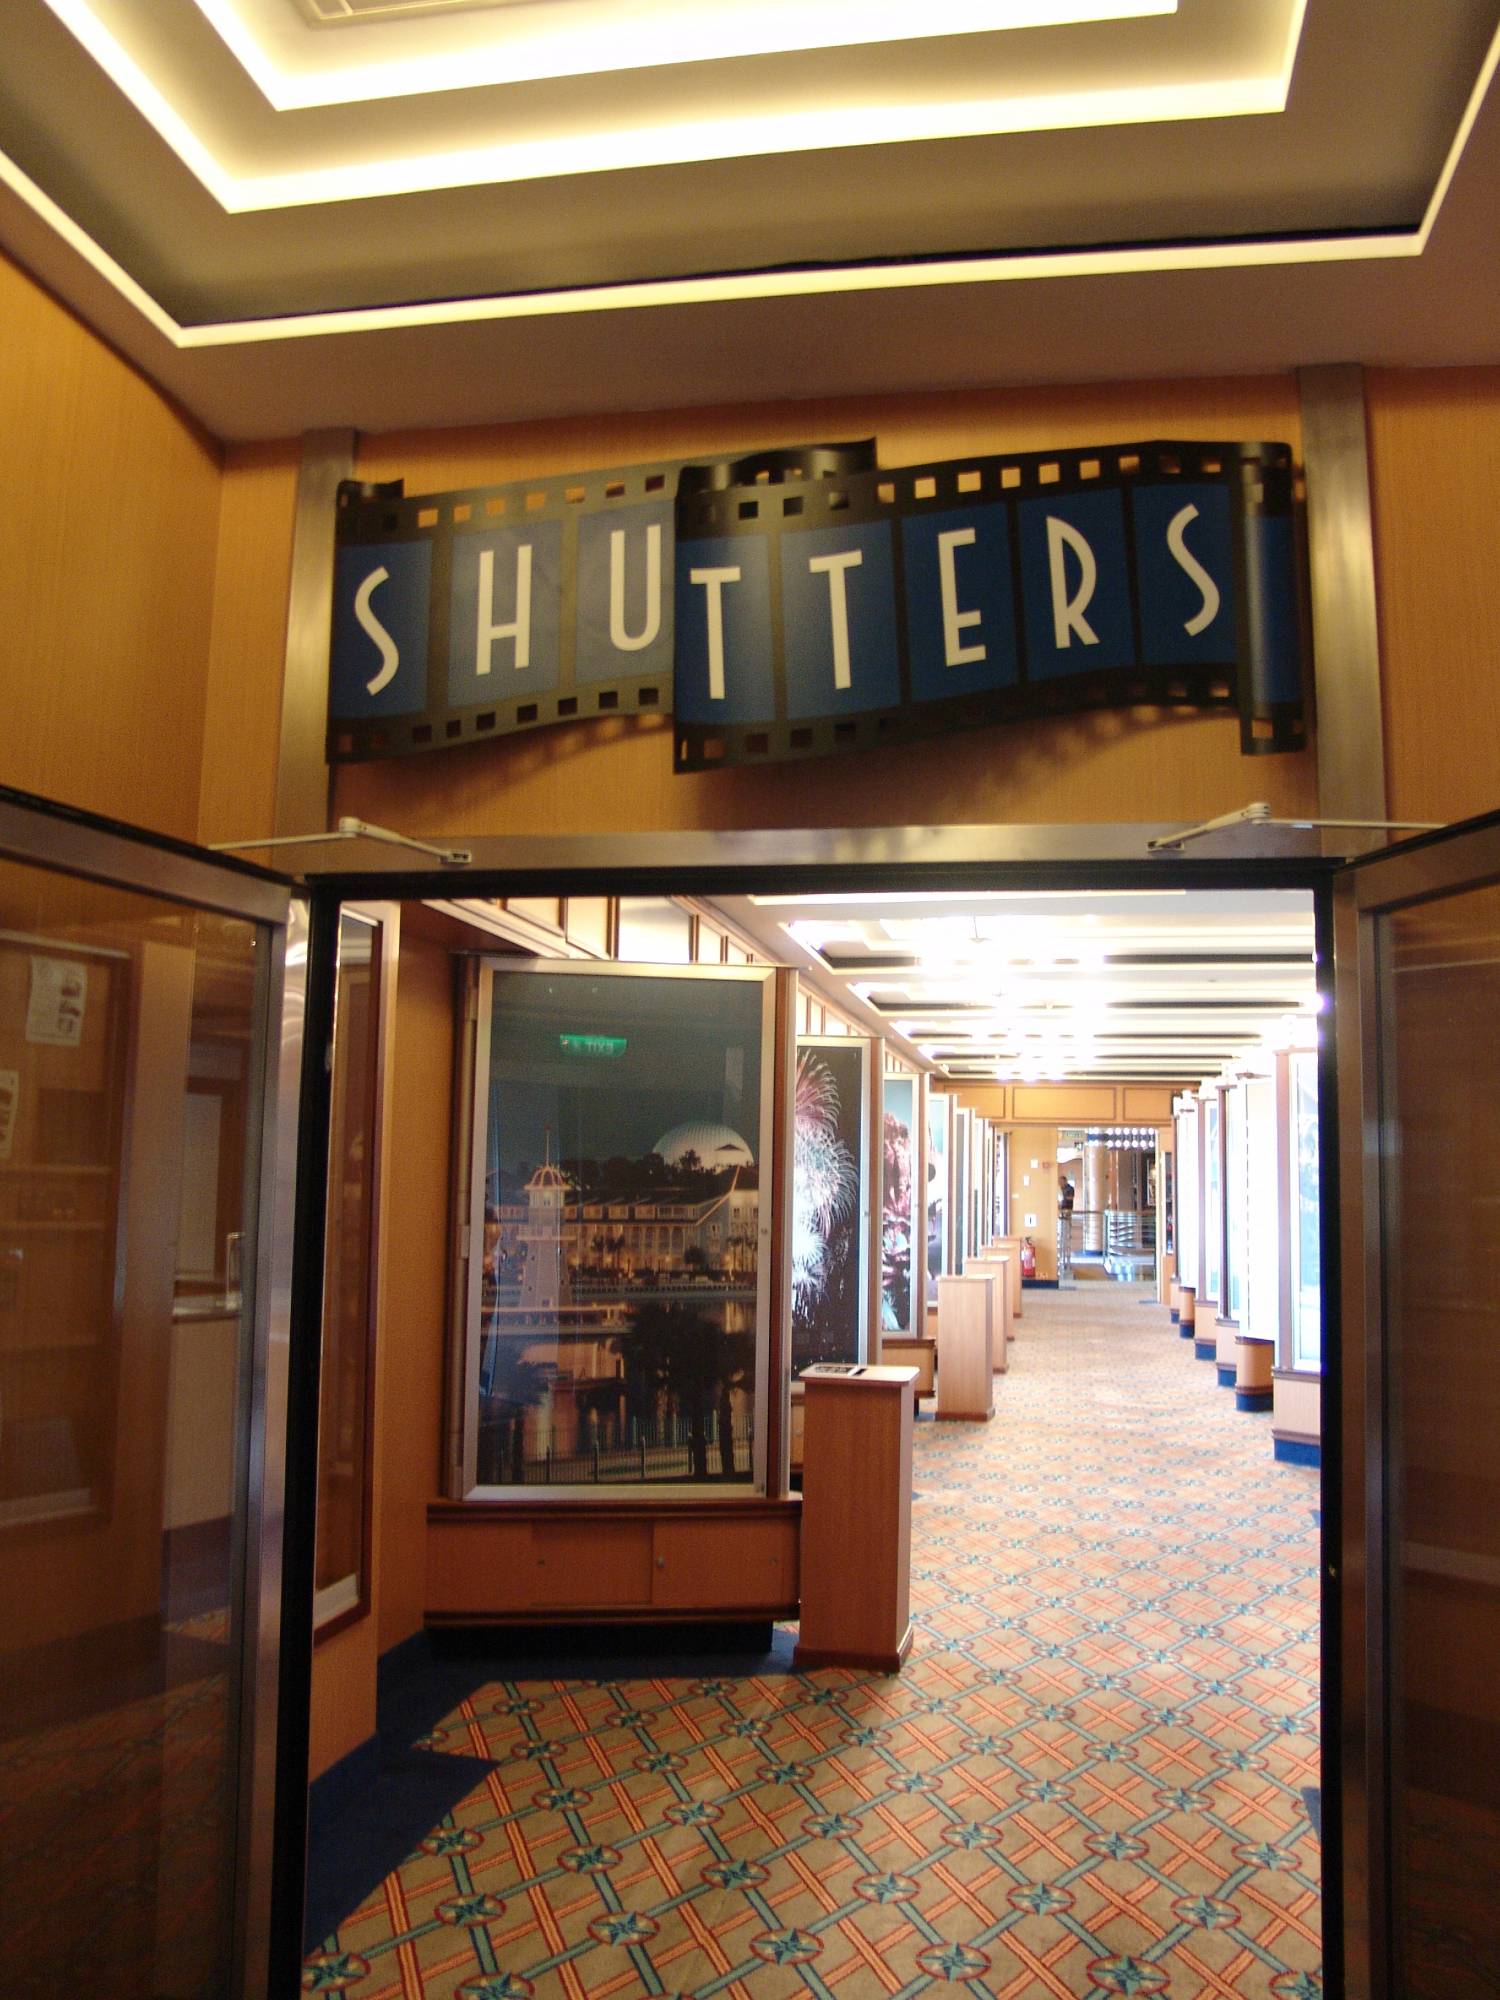 Disney Magic - entrance to Shutters